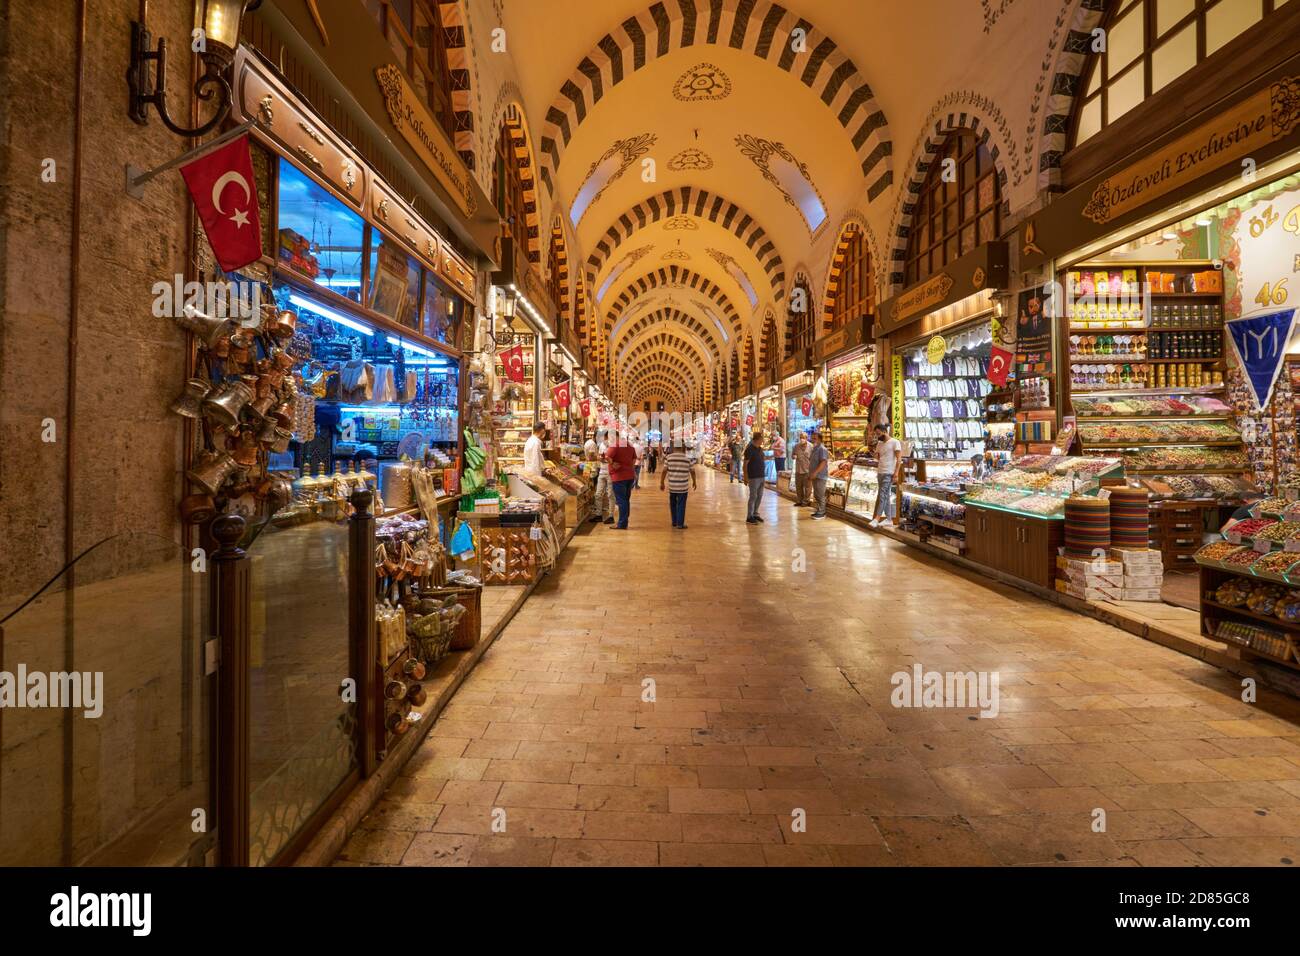 Passaggi e negozi nel mercato Egiziano delle Spezie, Istanbul, Turchia Foto Stock